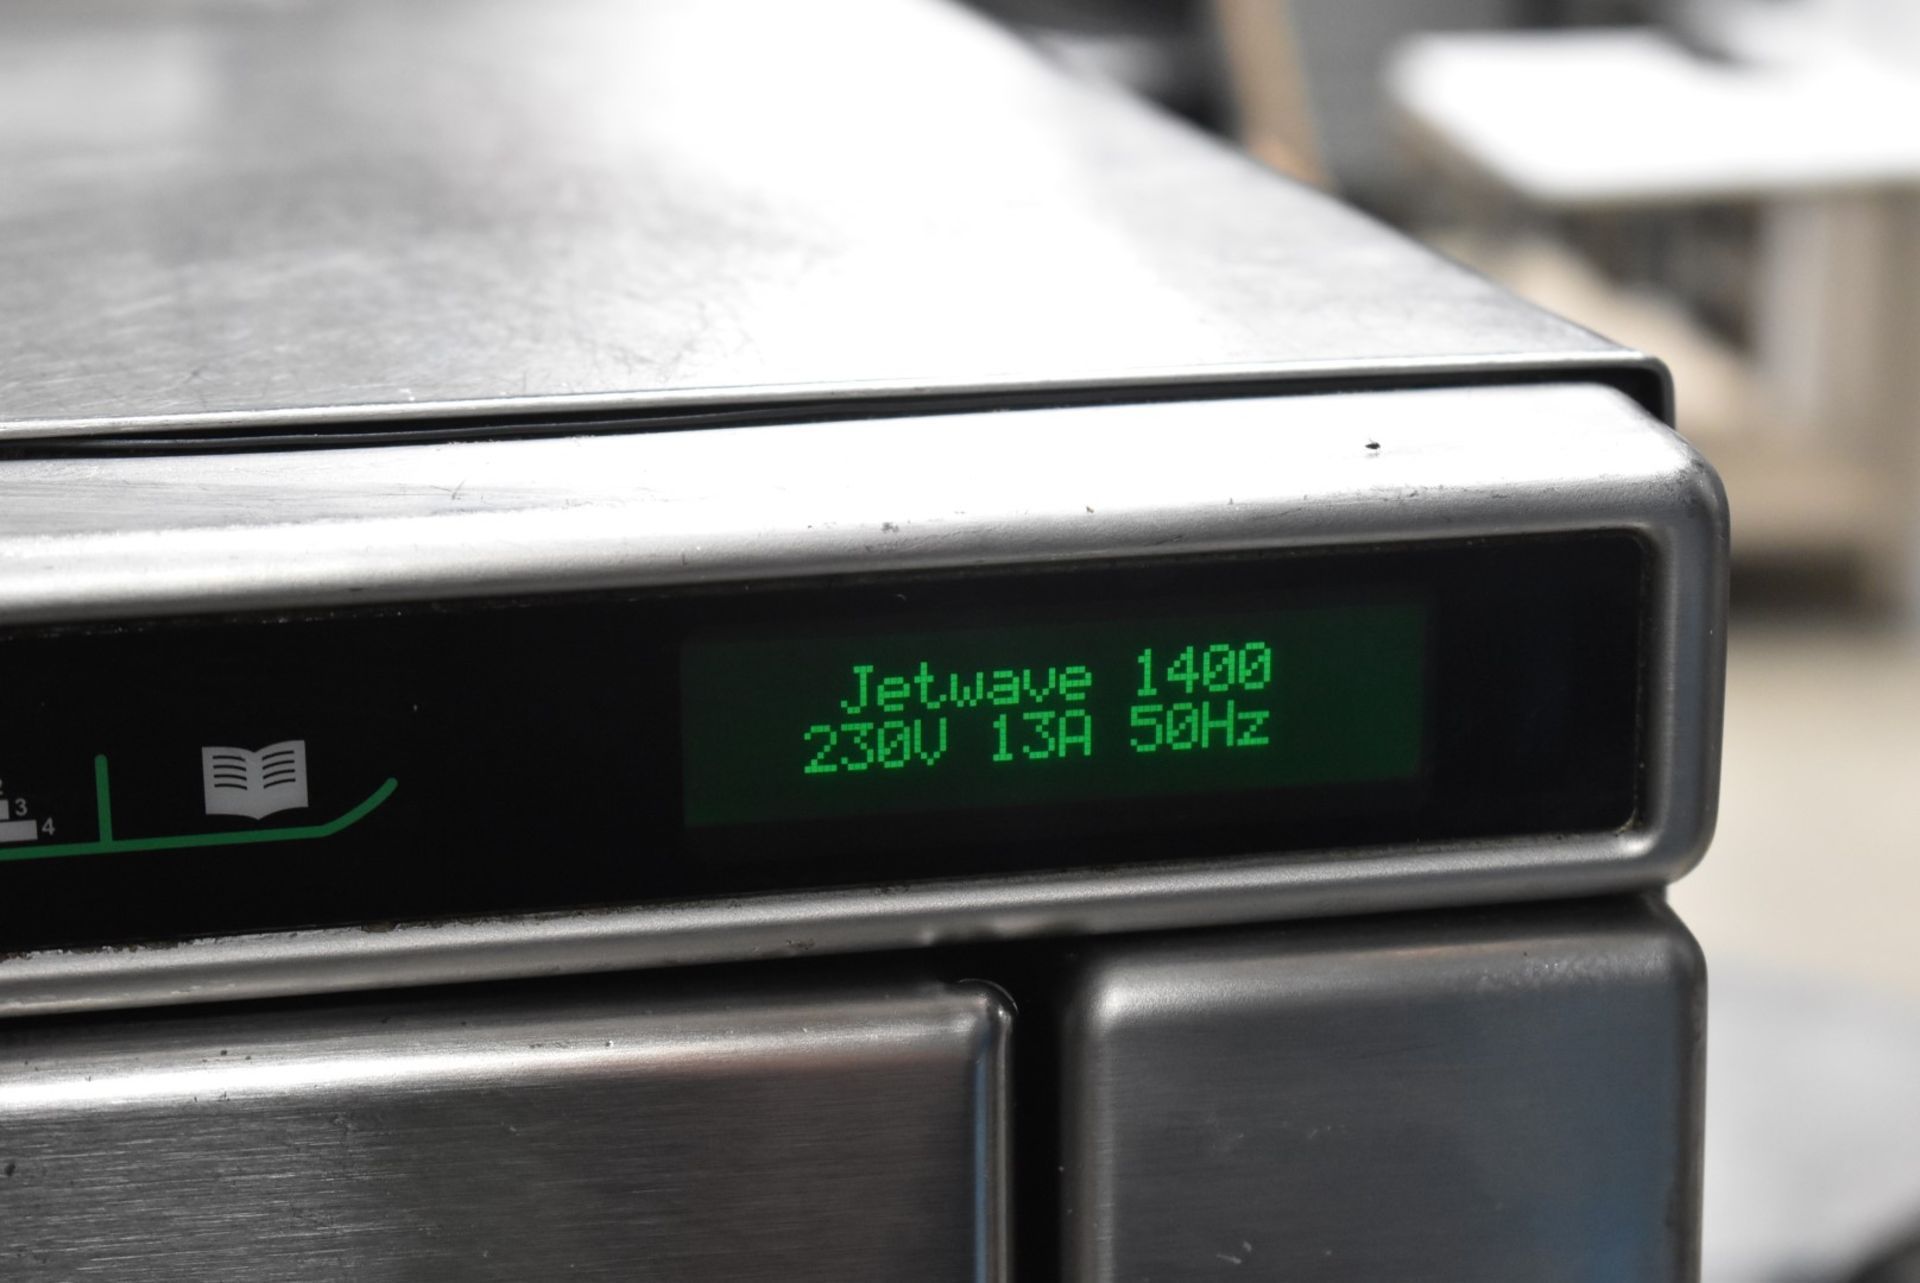 1 x Menumaster Jetwave JET514U High Speed Combination Microwave Oven - RRP £2,400 - Image 5 of 7